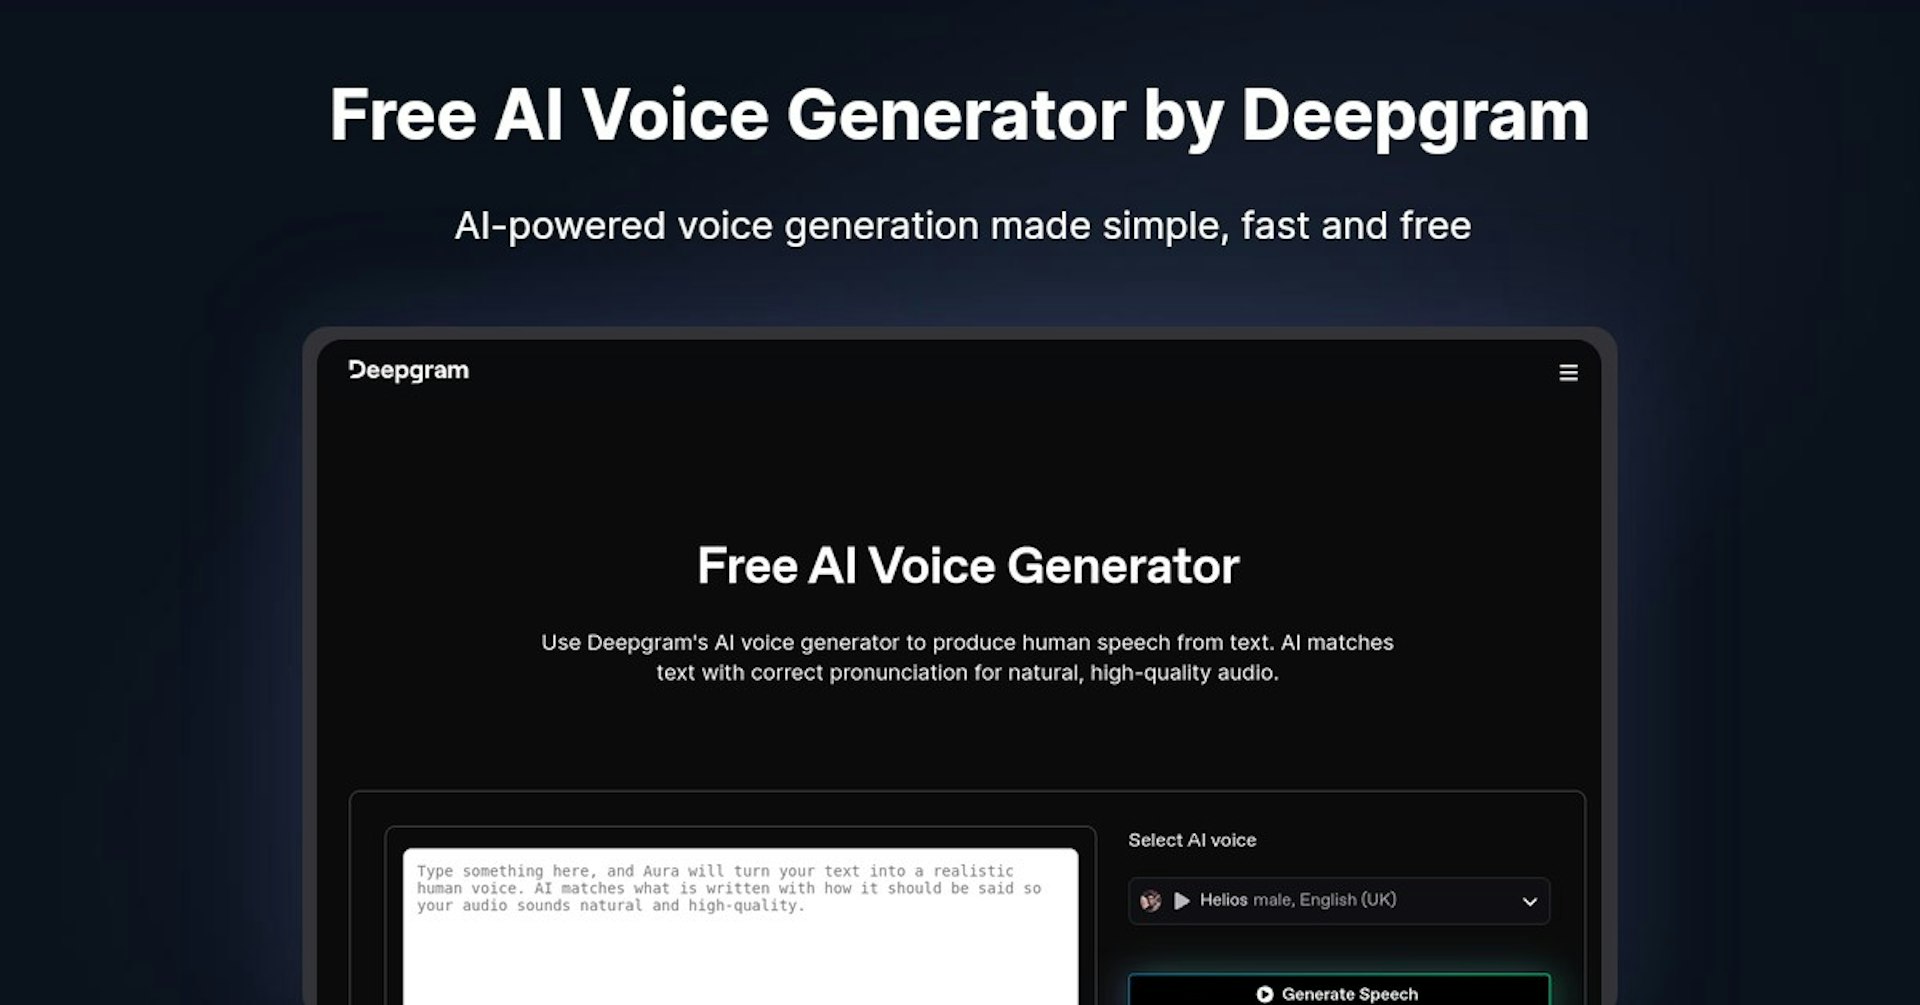 Free AI Voice Generator by Deepgram